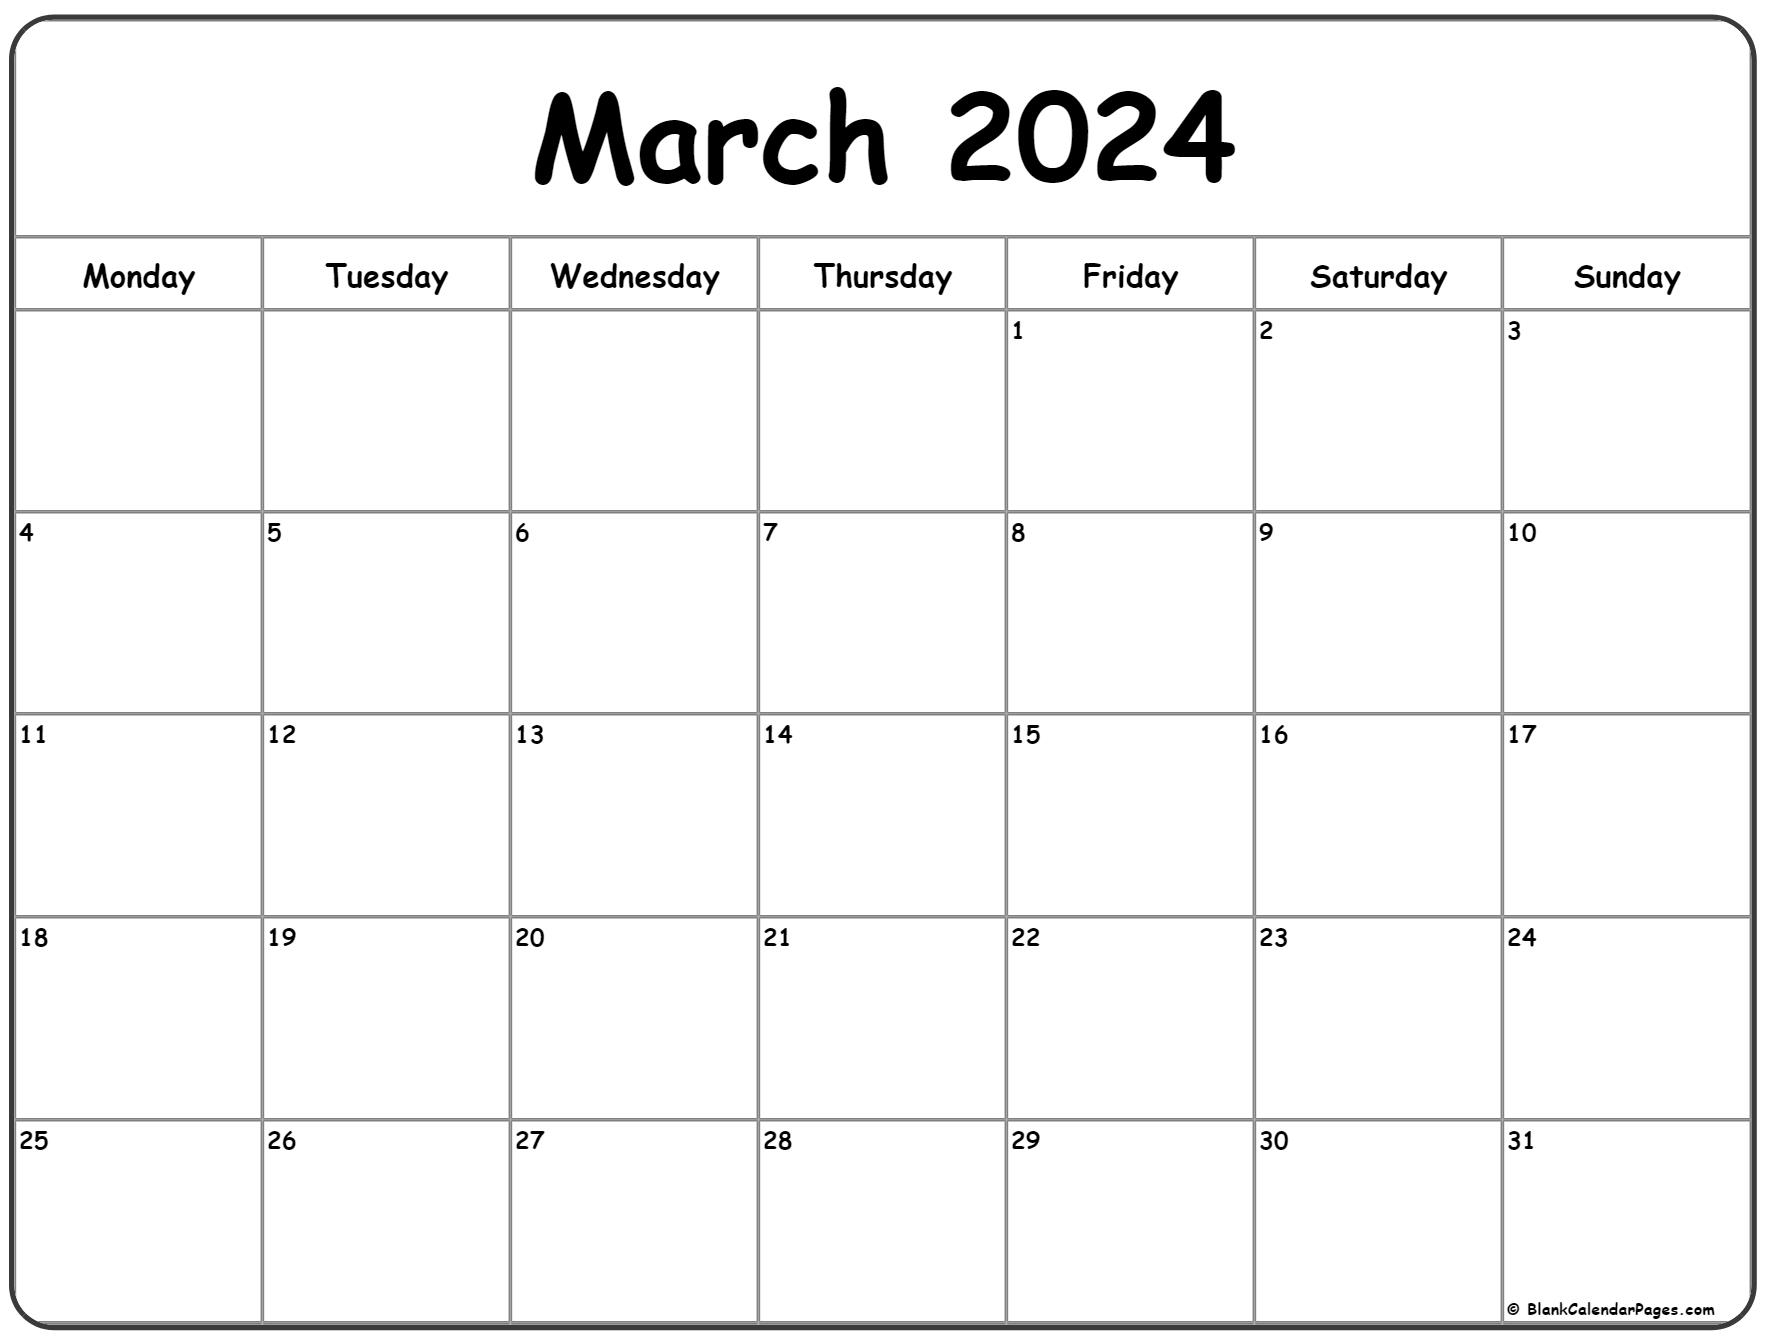 March 2024 Monday Calendar | Monday To Sunday for 2024 Printable March Calendar